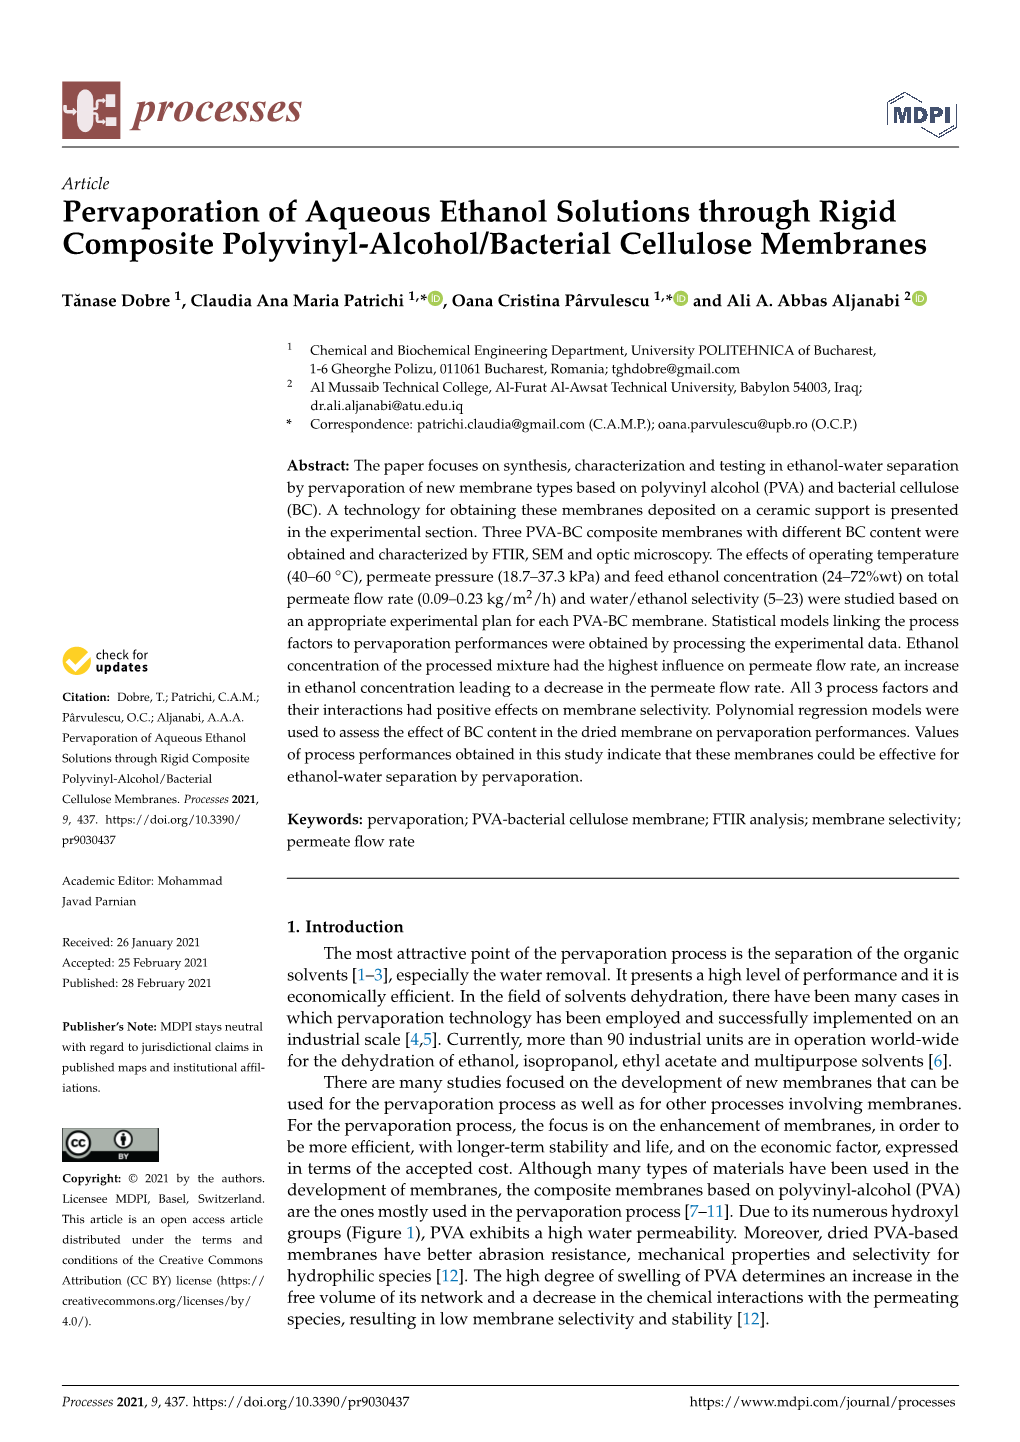 Pervaporation of Aqueous Ethanol Solutions Through Rigid Composite Polyvinyl-Alcohol/Bacterial Cellulose Membranes